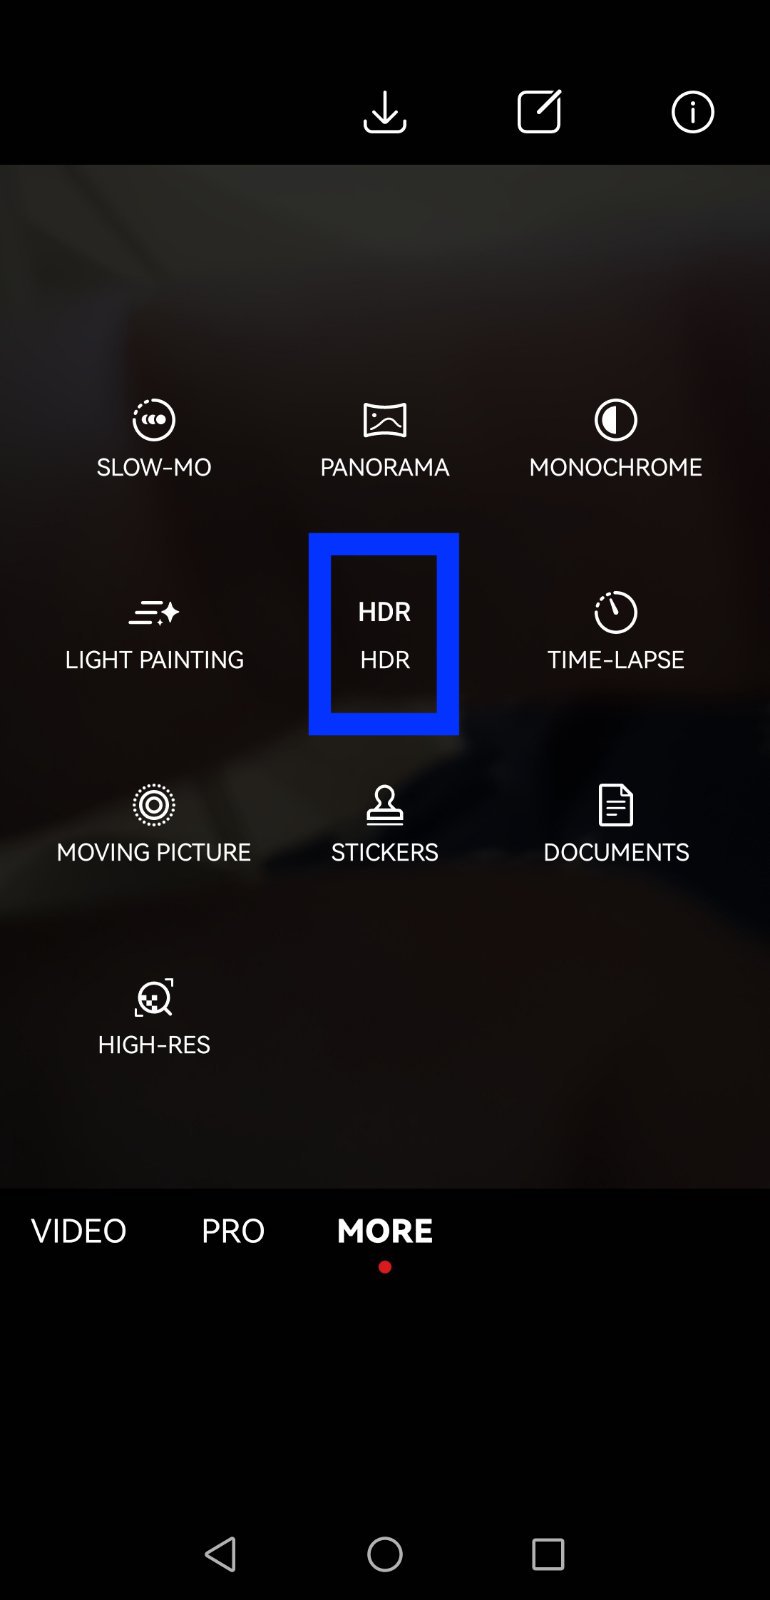 HDR option - phone's camera